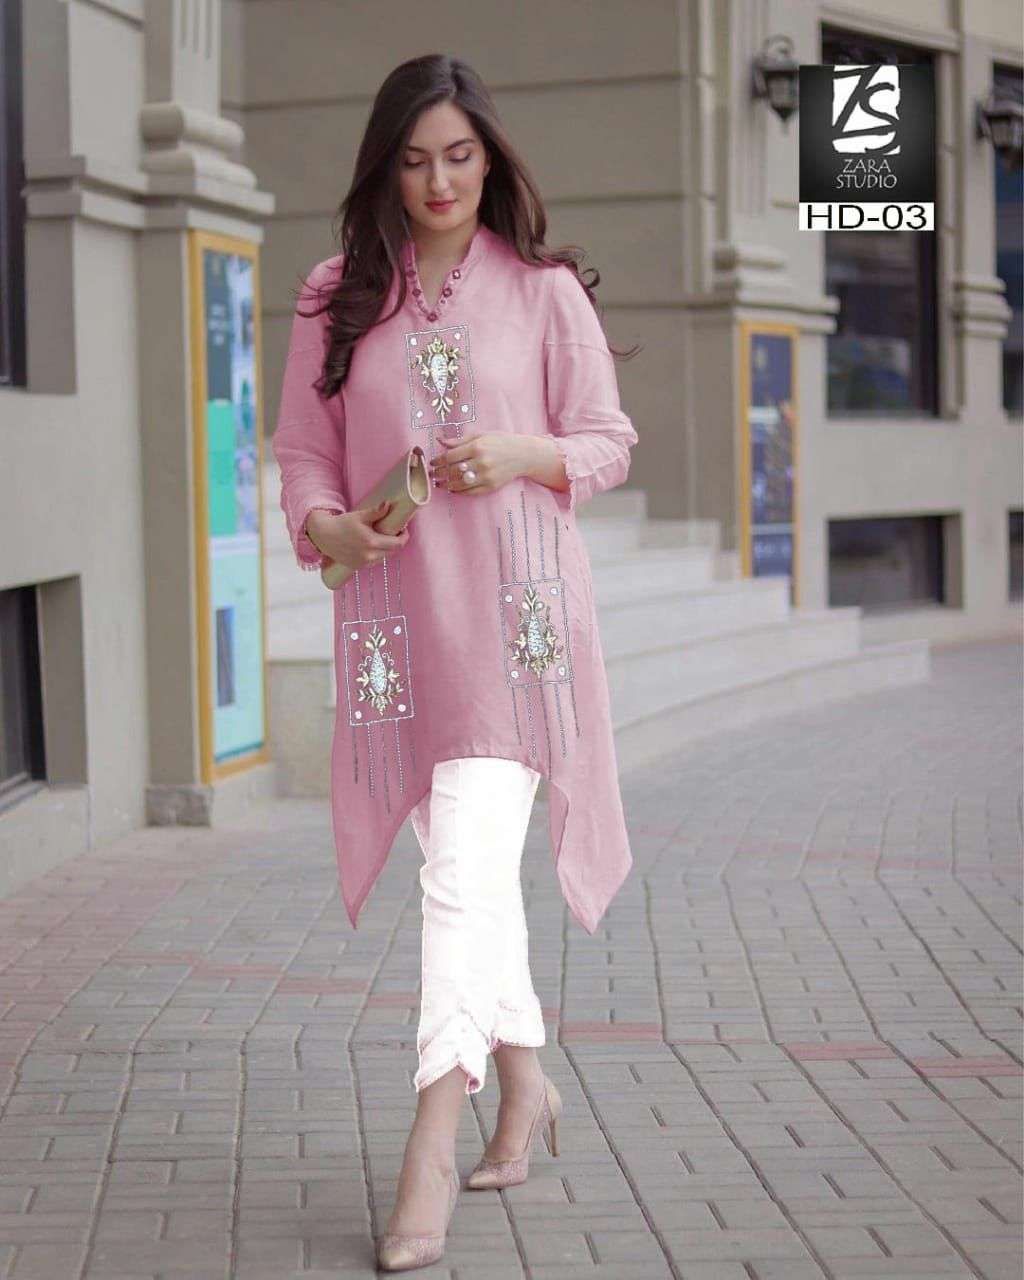 zara studio hd 03 georgette stylish pakistani tunic with fancy pant